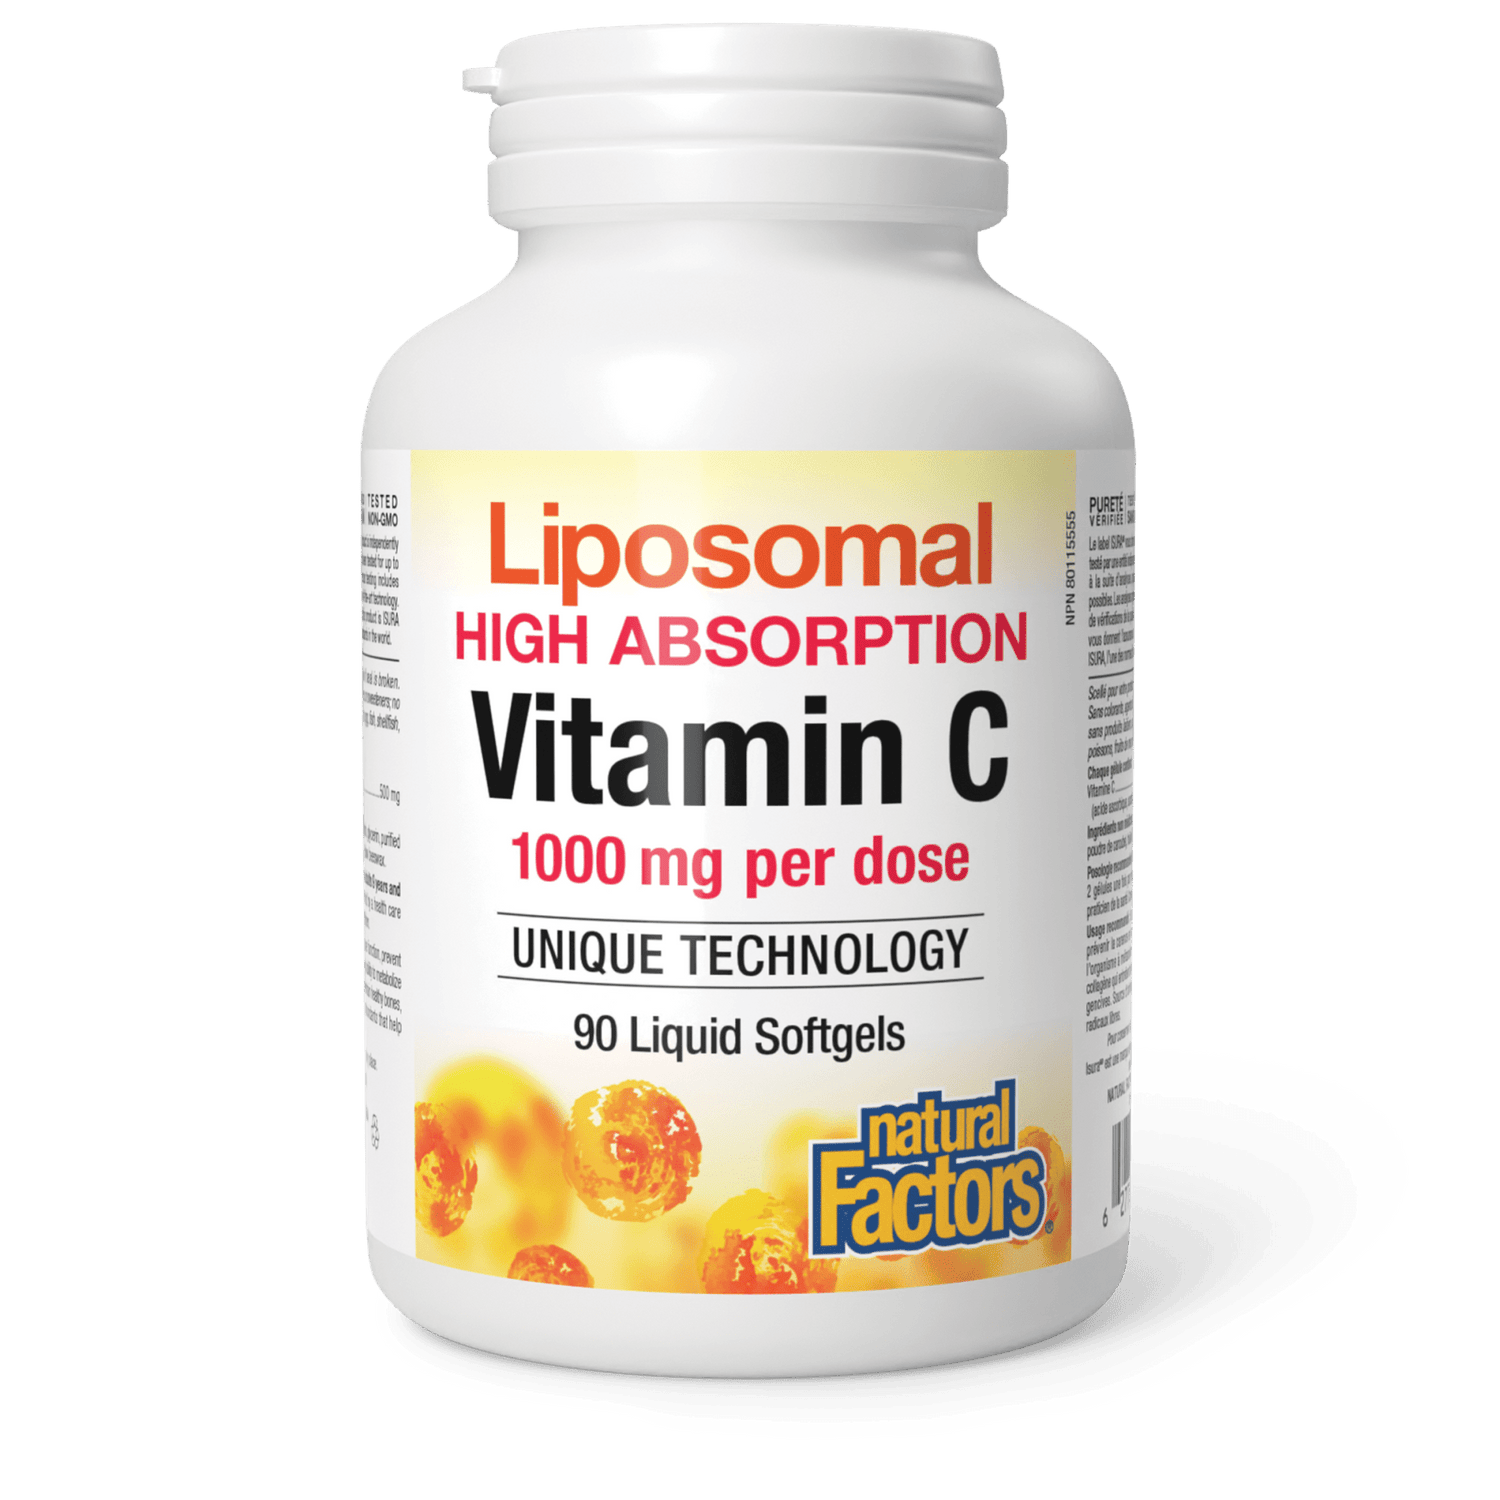 Liposomal Vitamin C, Natural Factors|v|image|1319